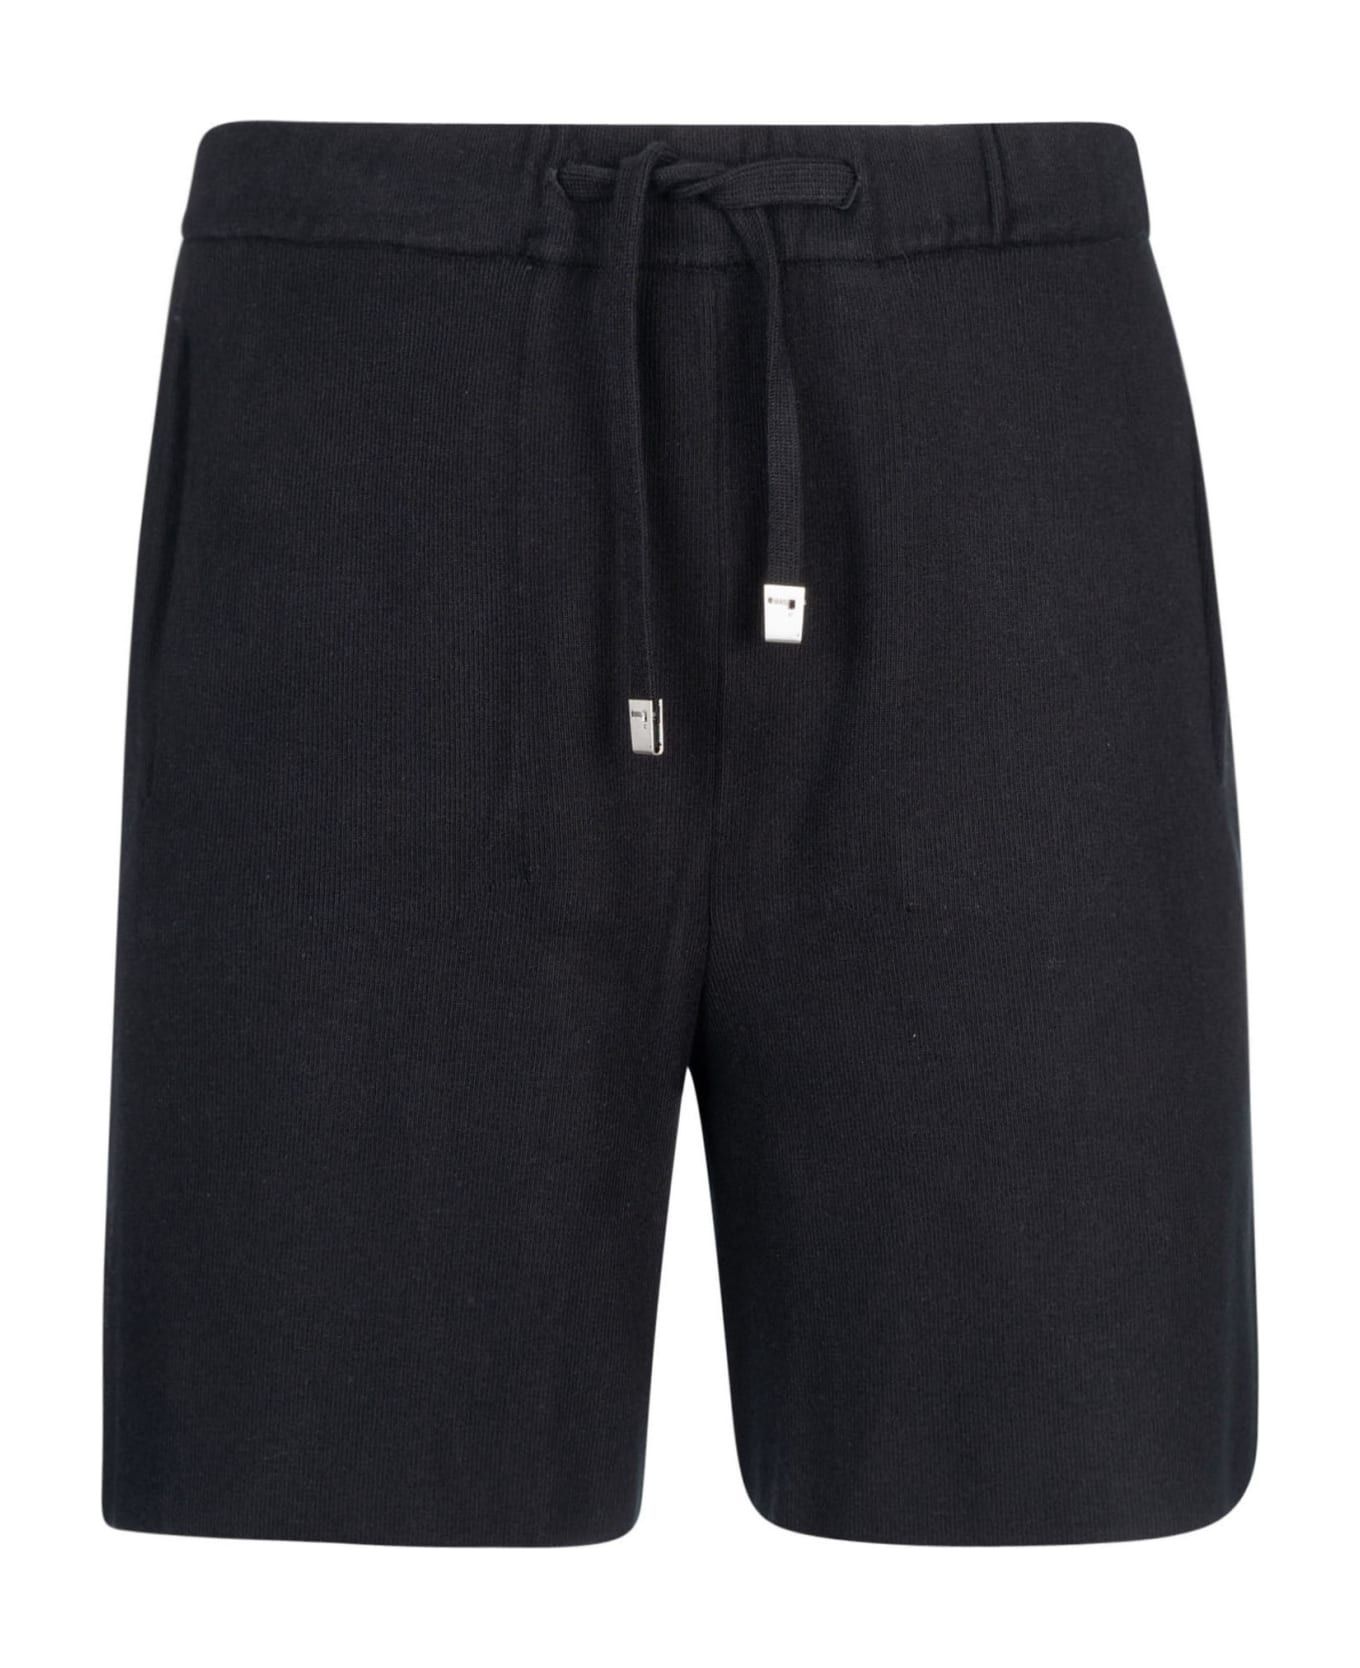 1017 ALYX 9SM Laced Shorts - Black